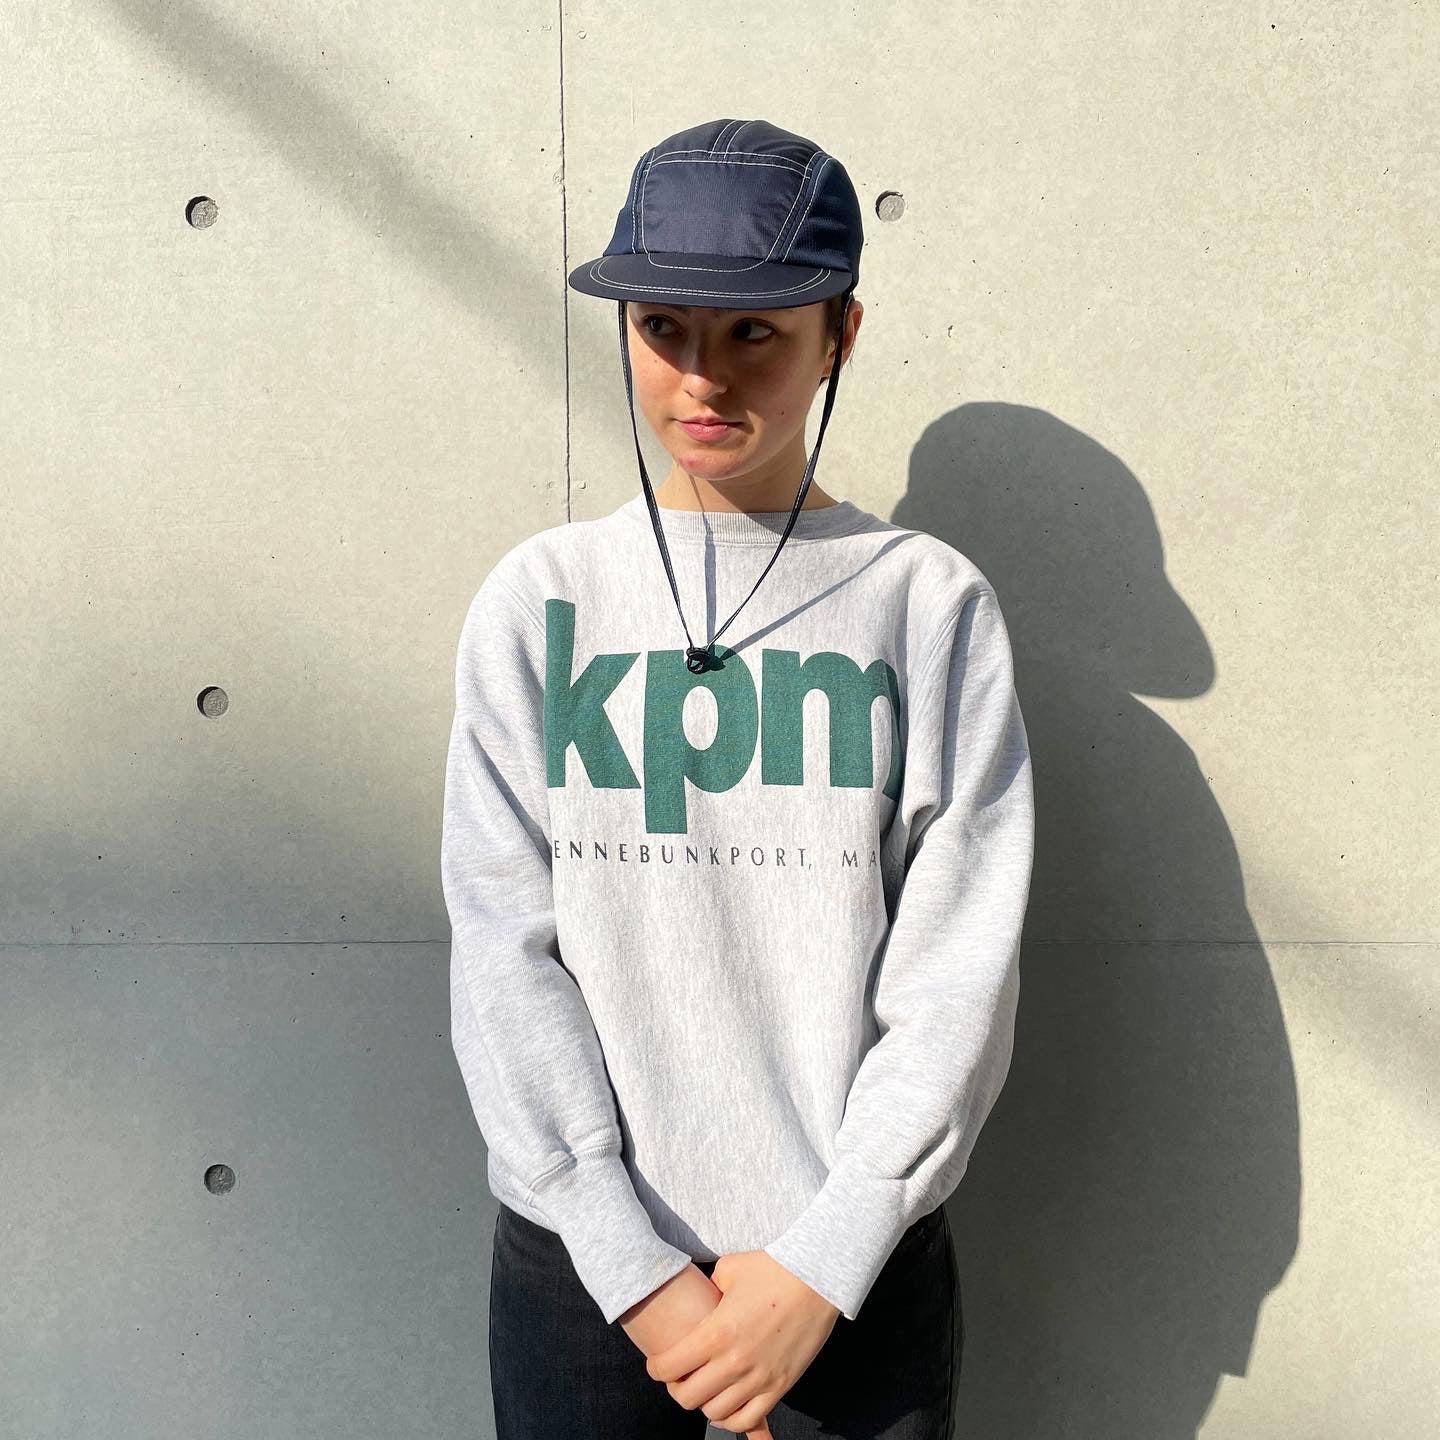 Kpm Kennebunkport, Maine Champion Reverse Weave Sweatshirt